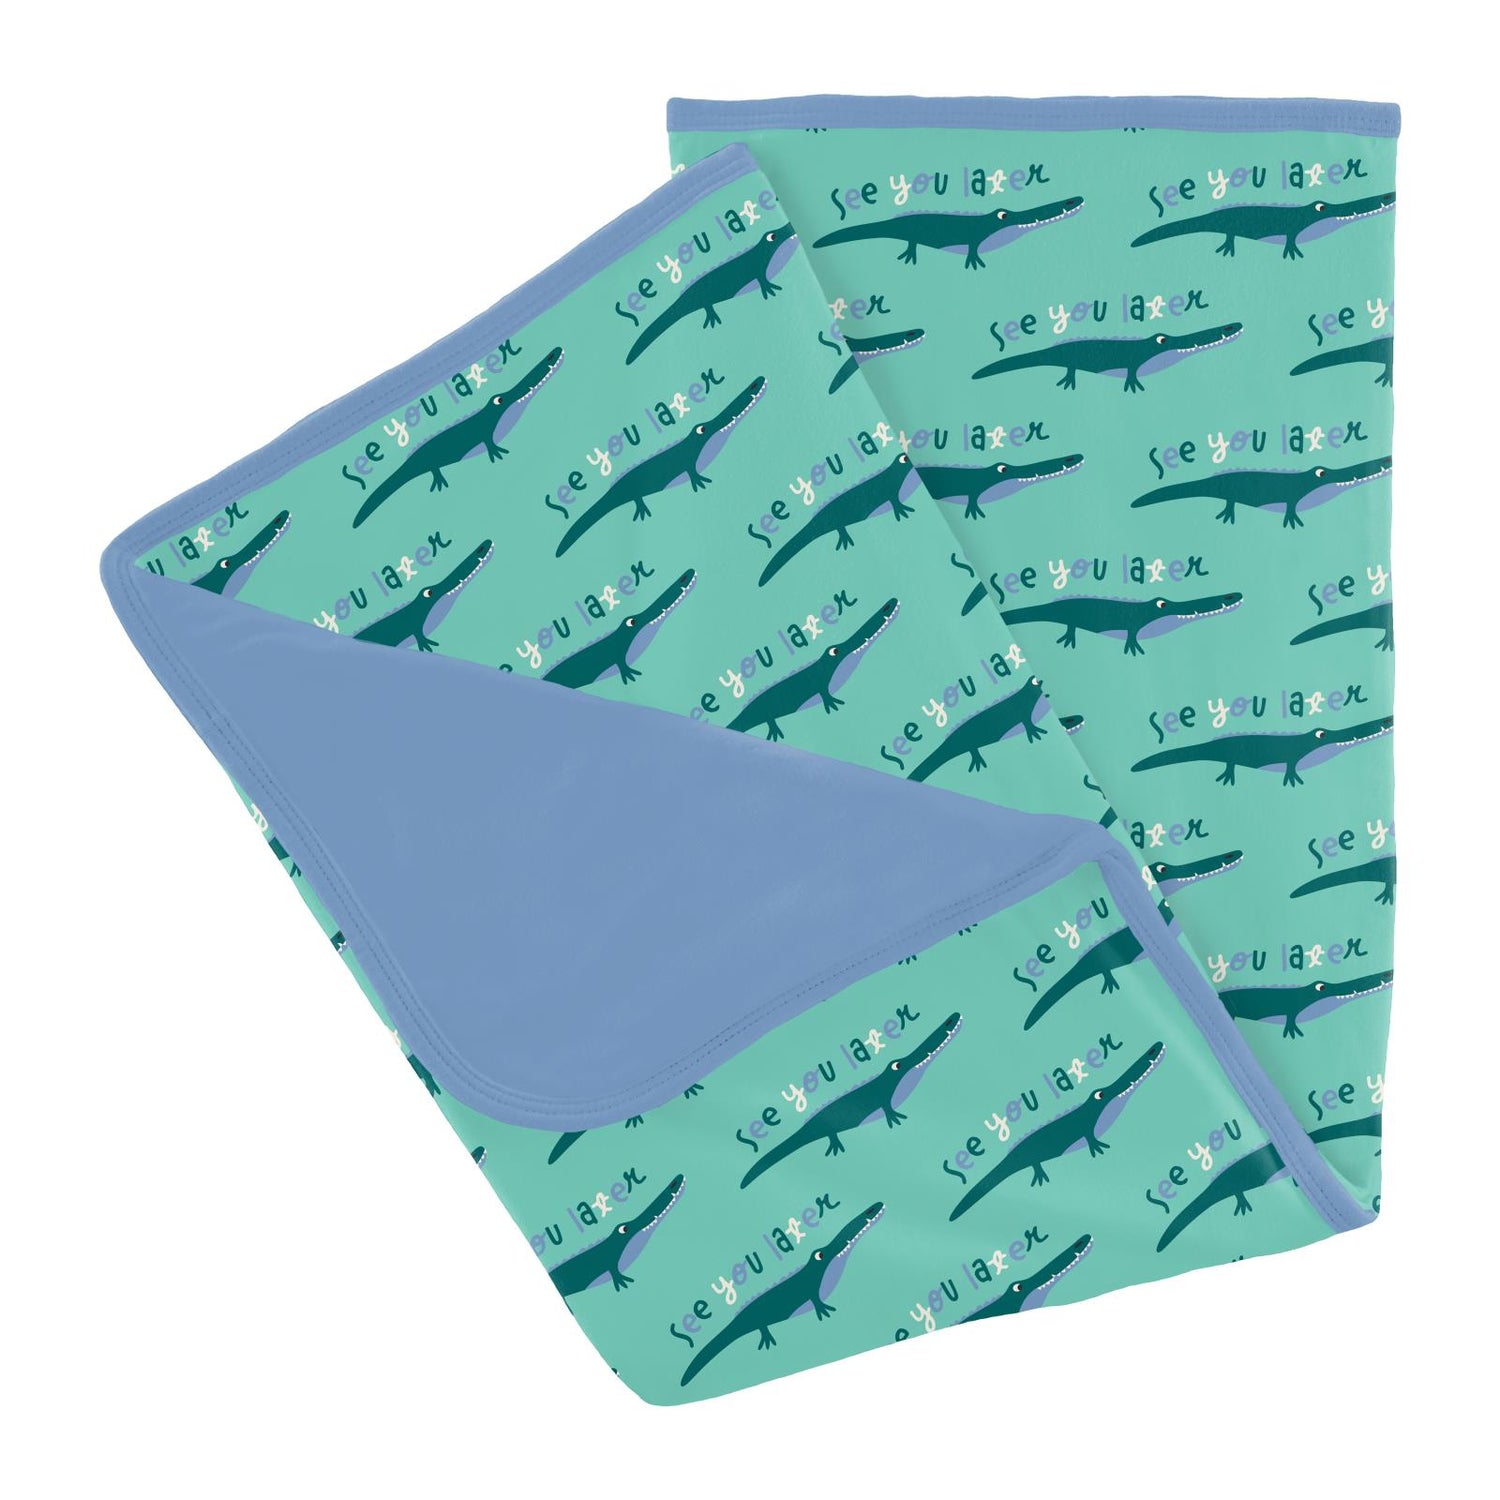 Print Stroller Blanket in Glass Later Alligator